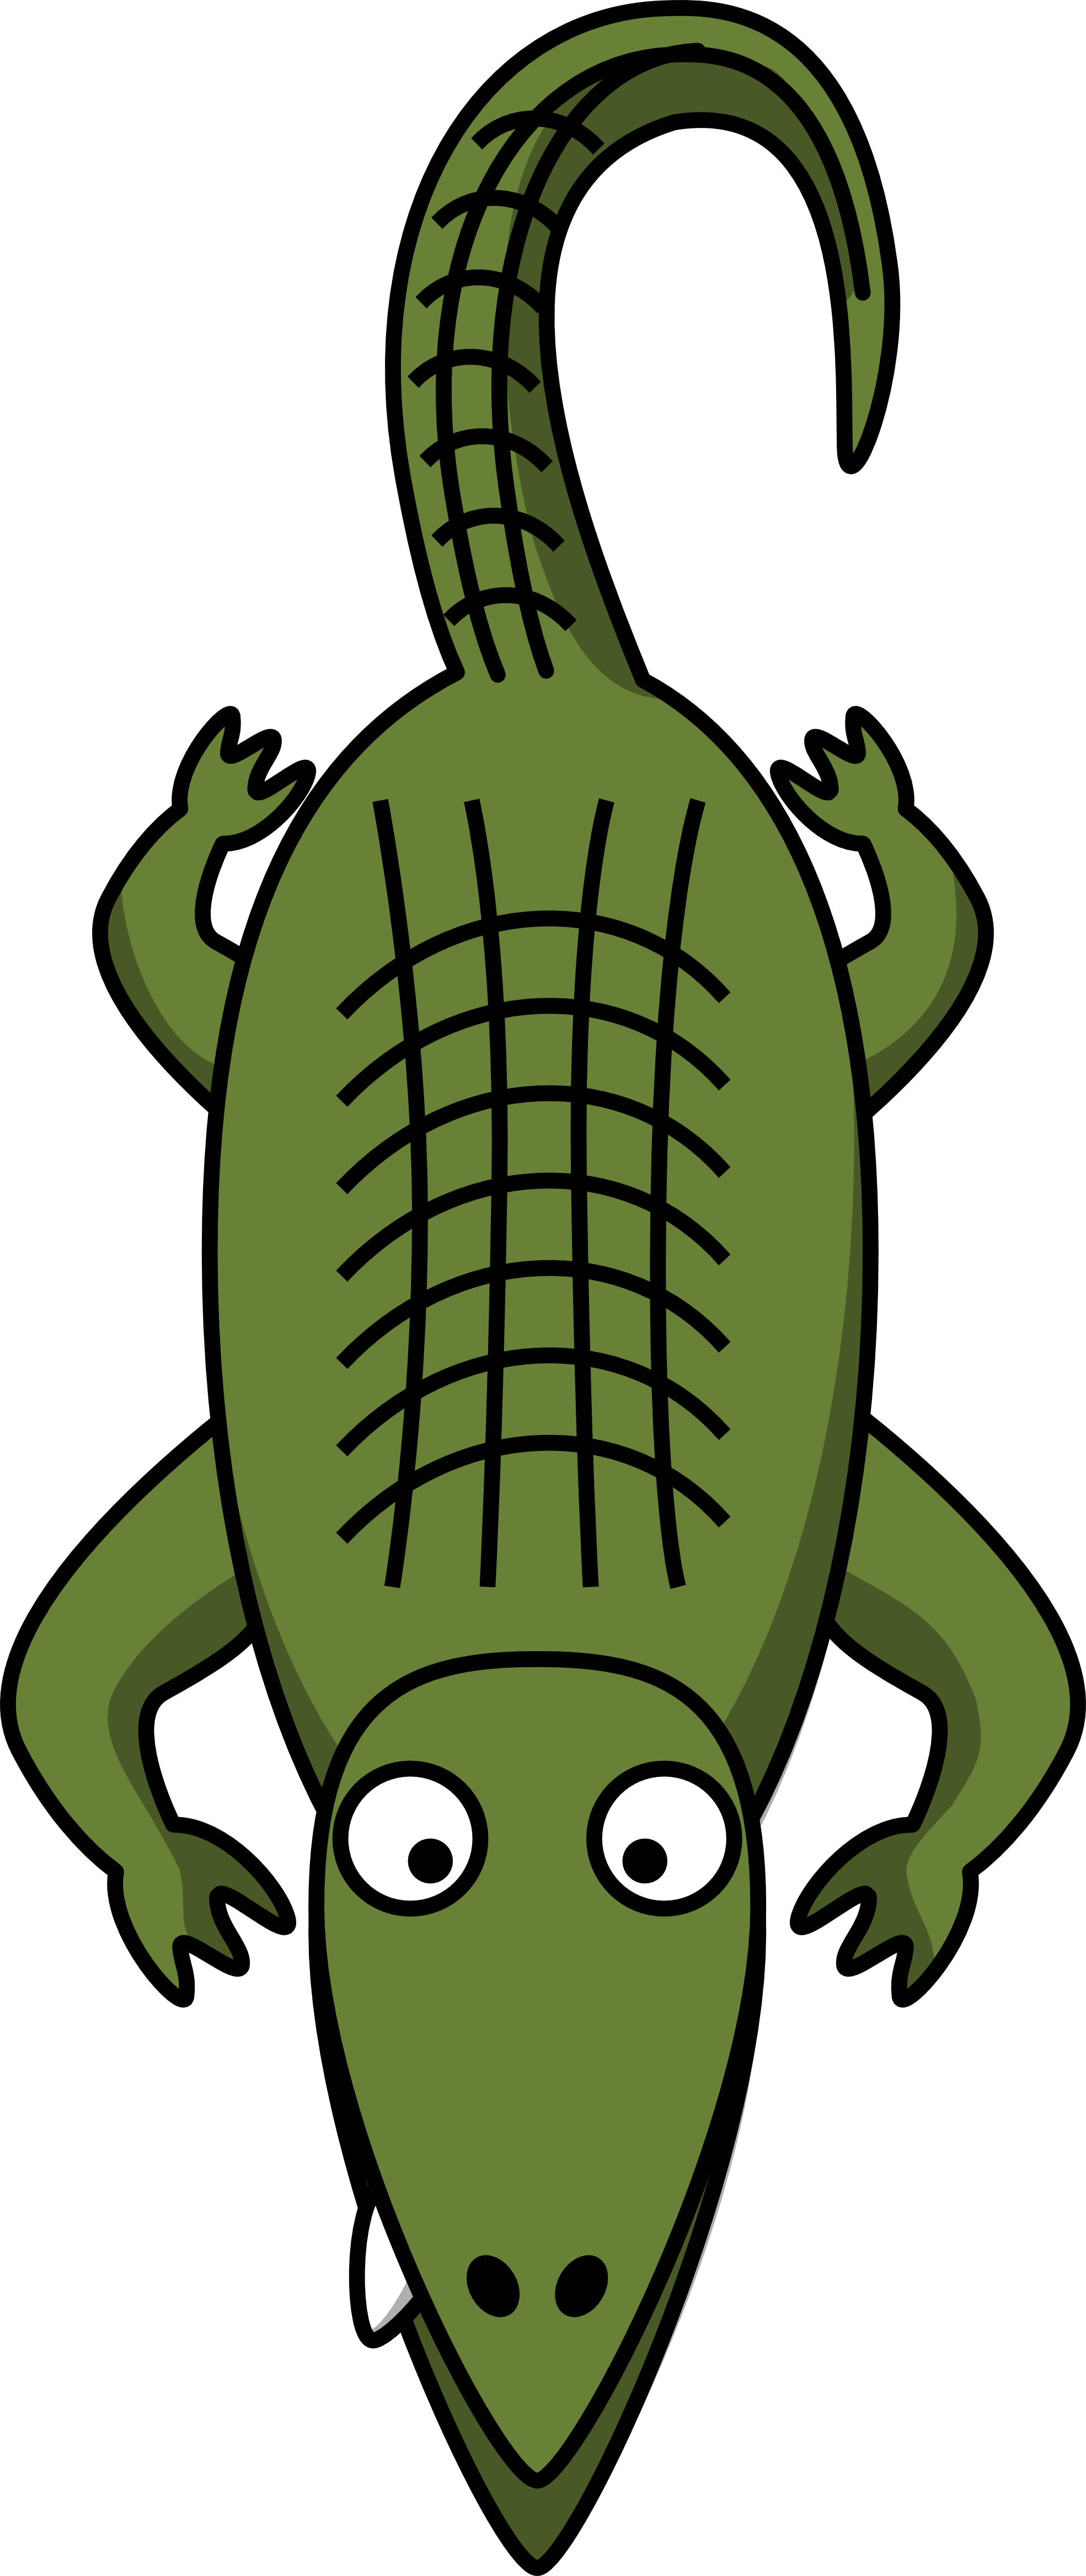 Studiofibonacci cartoon alligator.